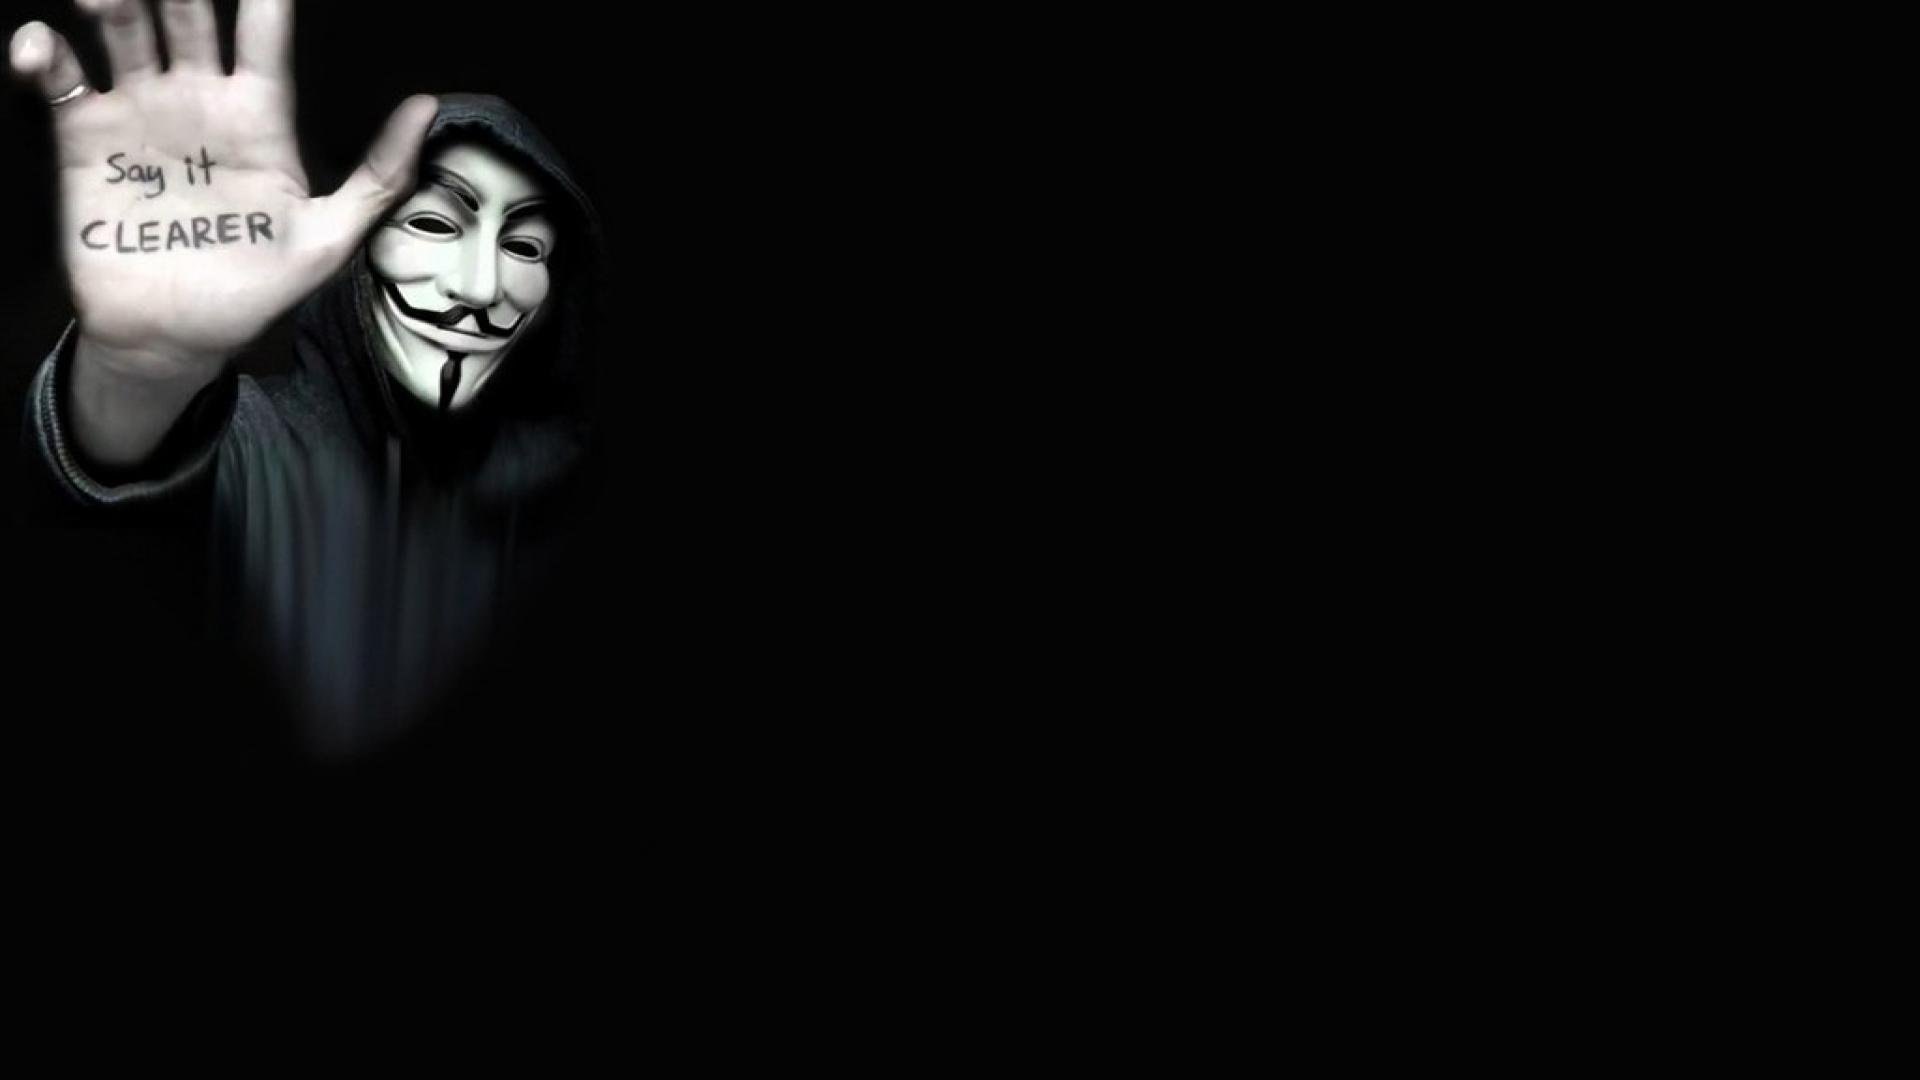 It was clear to them. Анонимус. Анонимус на черном фоне. Хакер анонимус. Маска анонима на черном фоне.